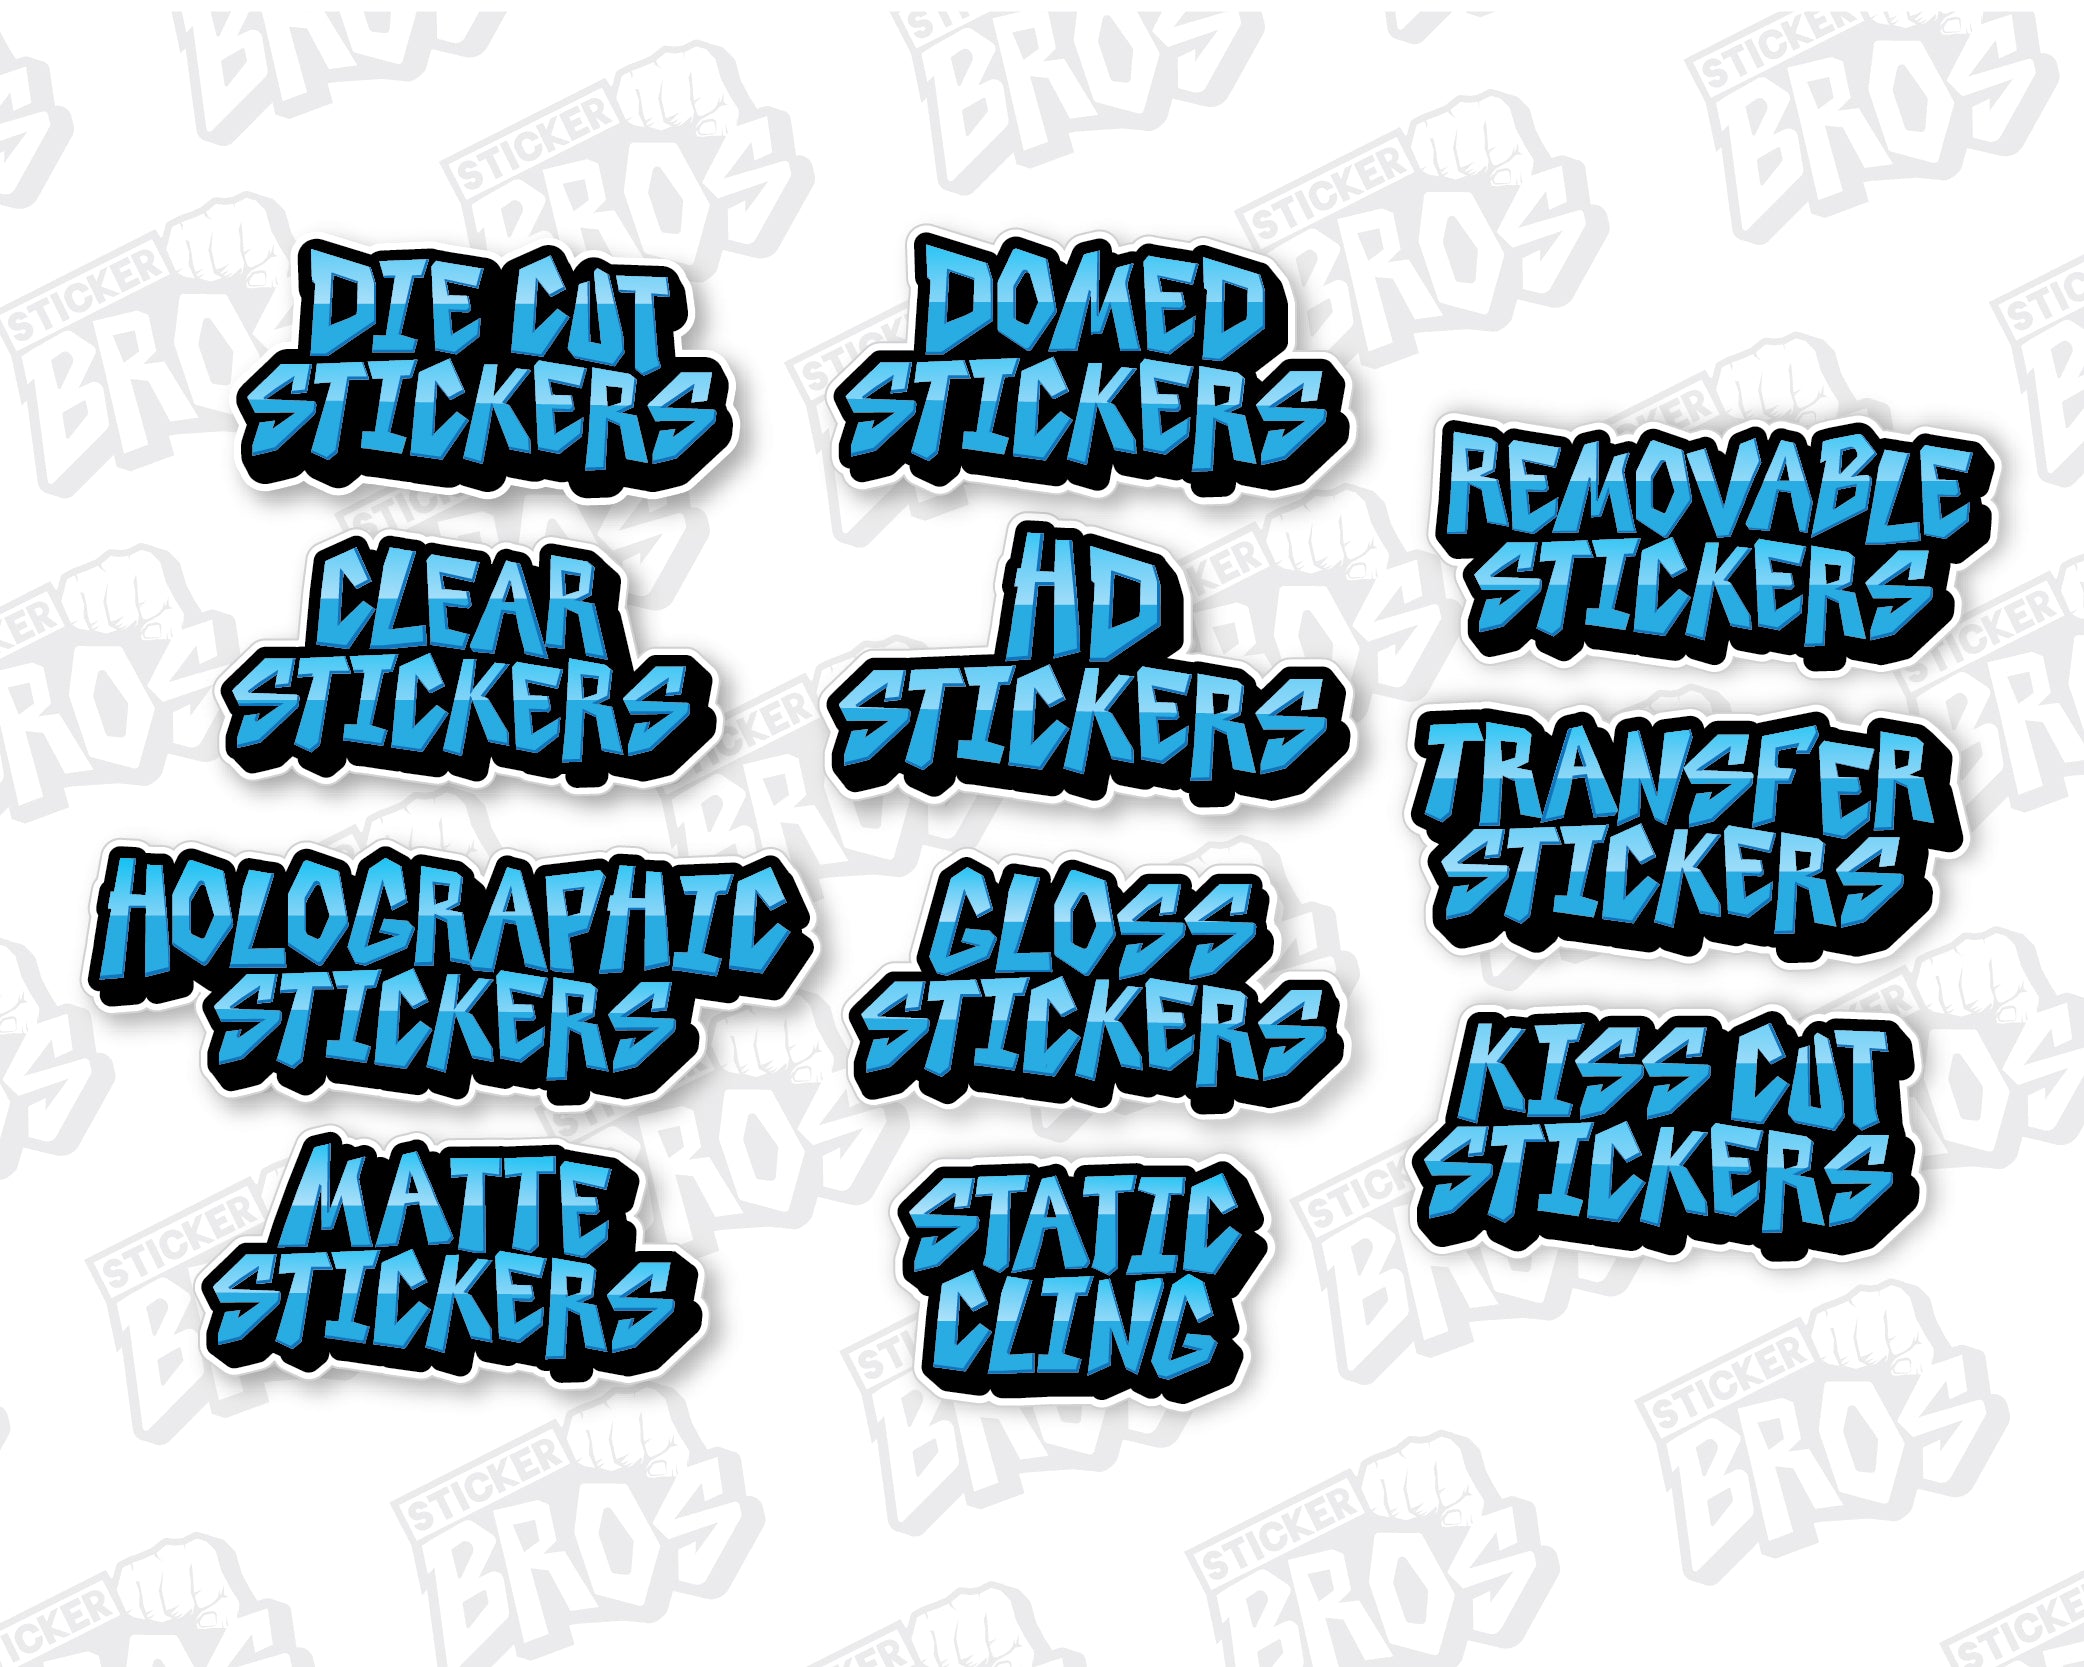 Sample Sticker Pack